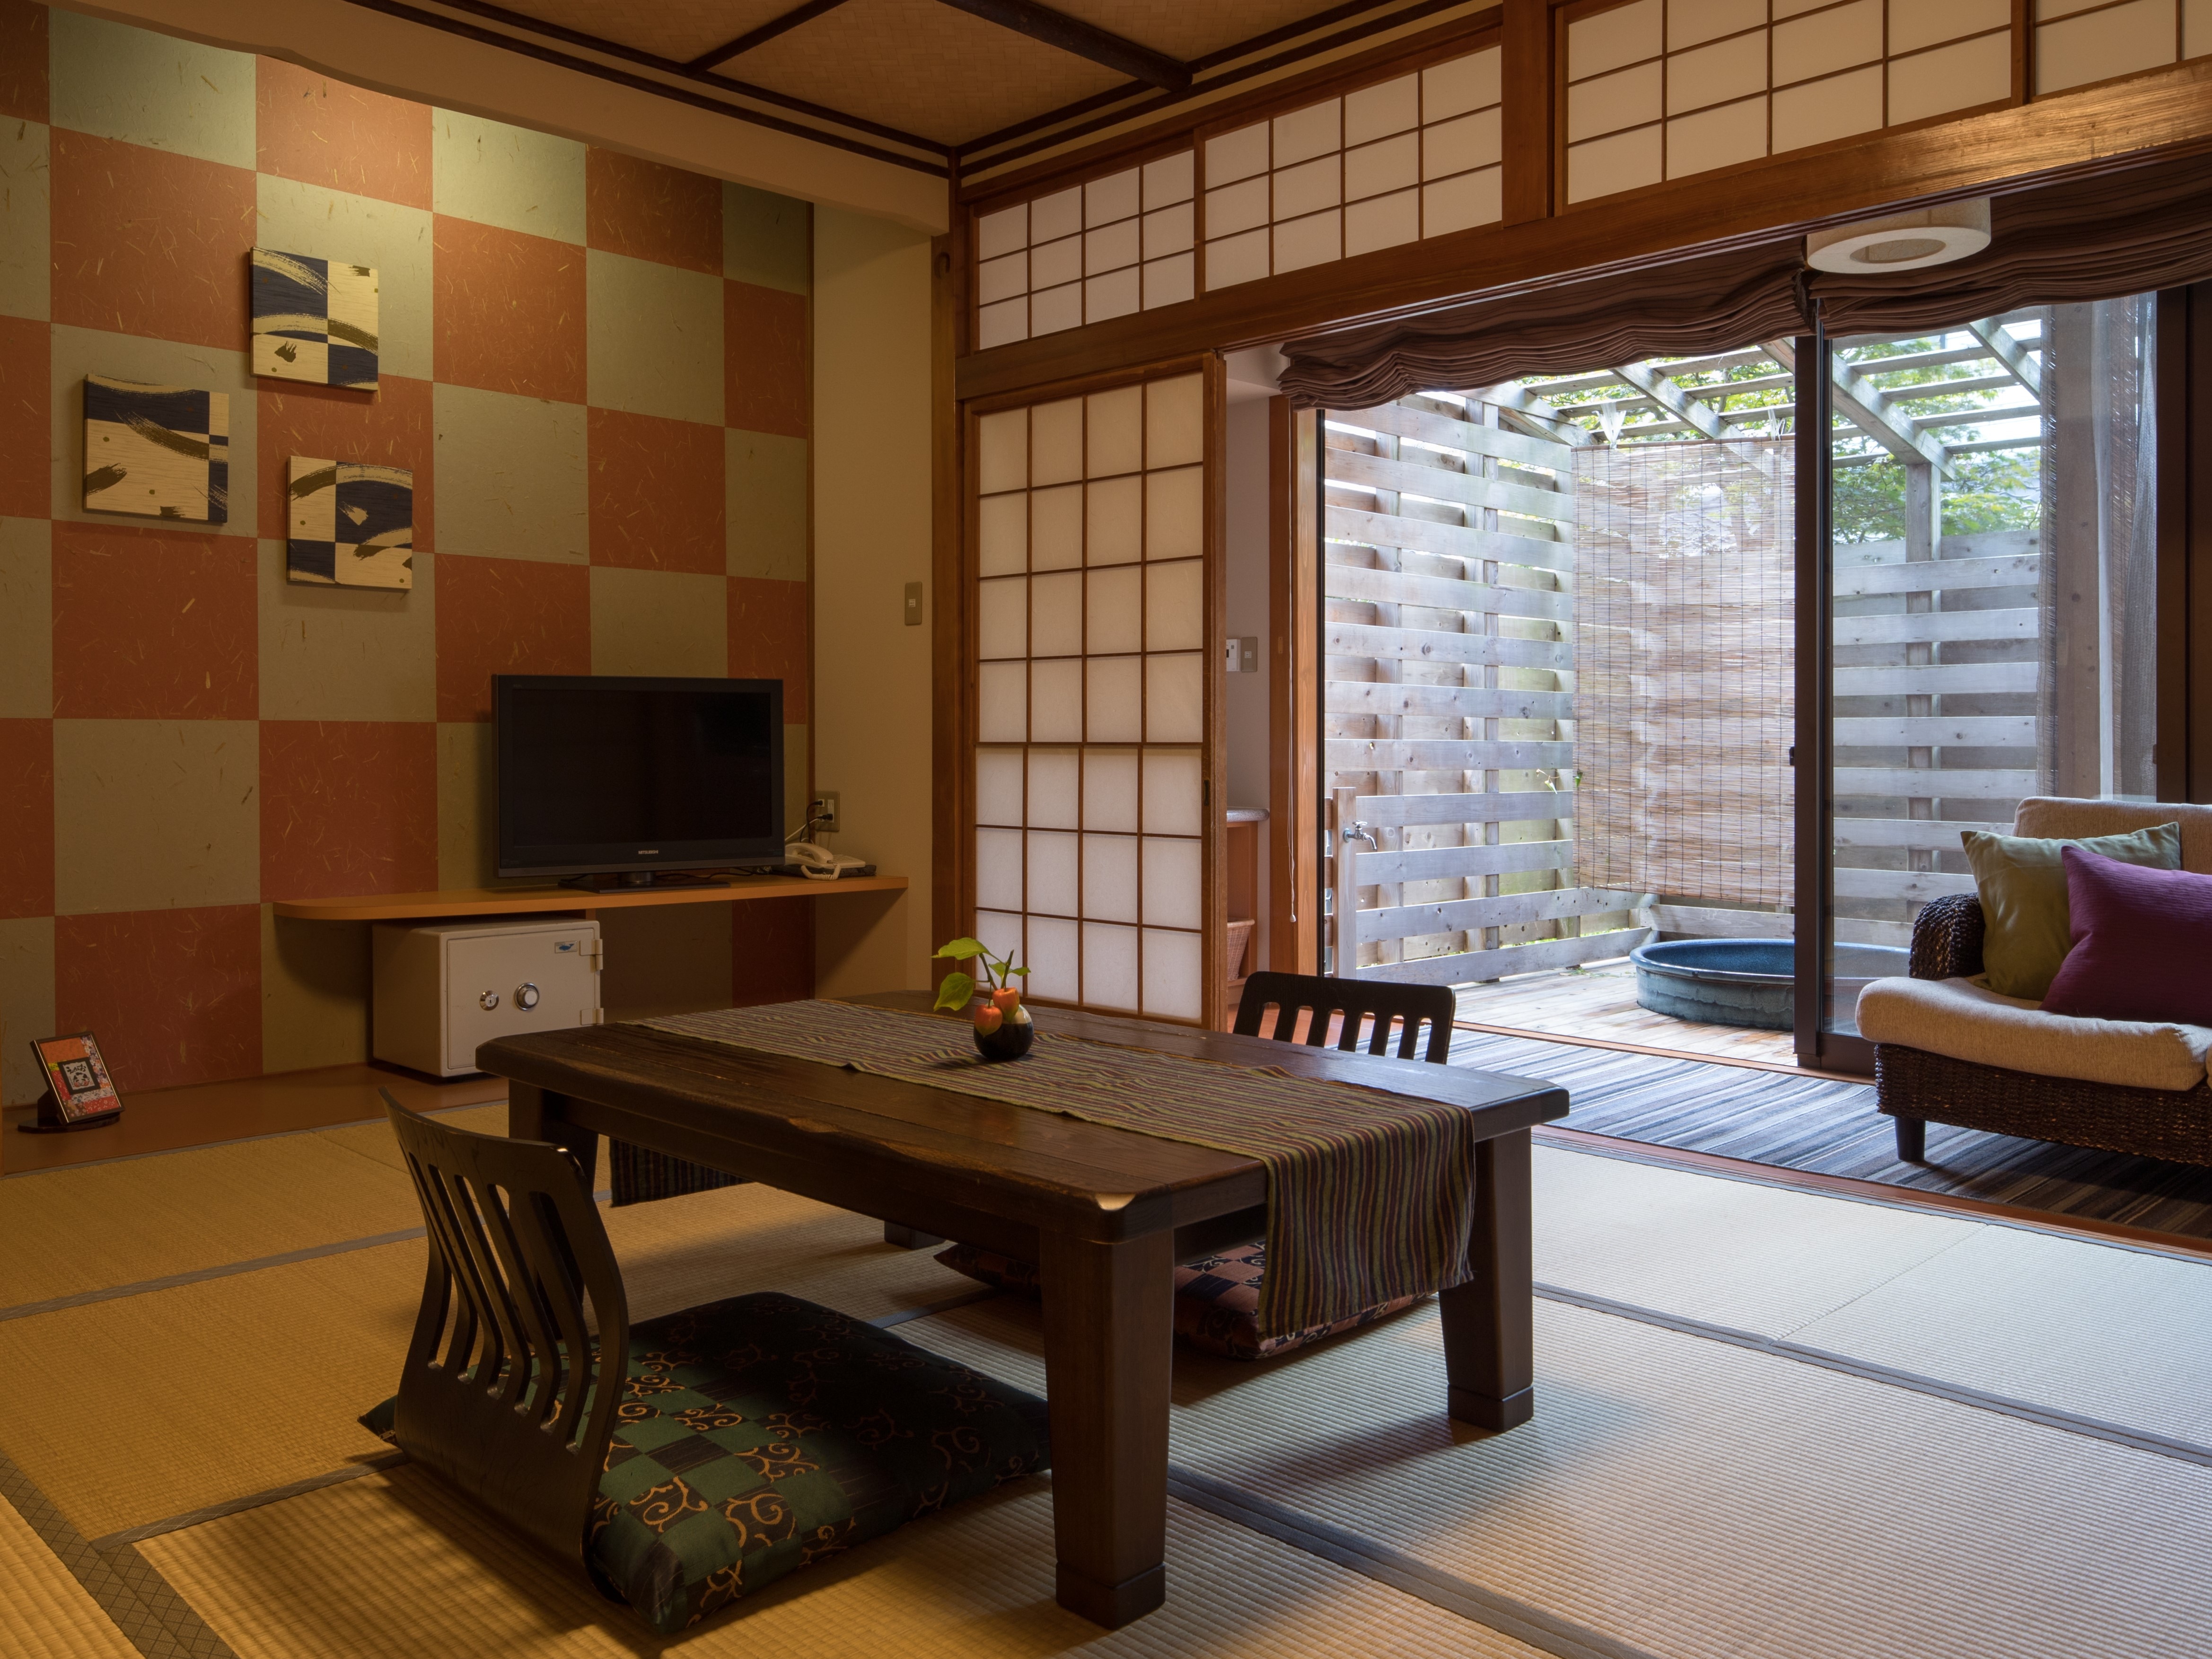 10 tatami mats with open-air bath